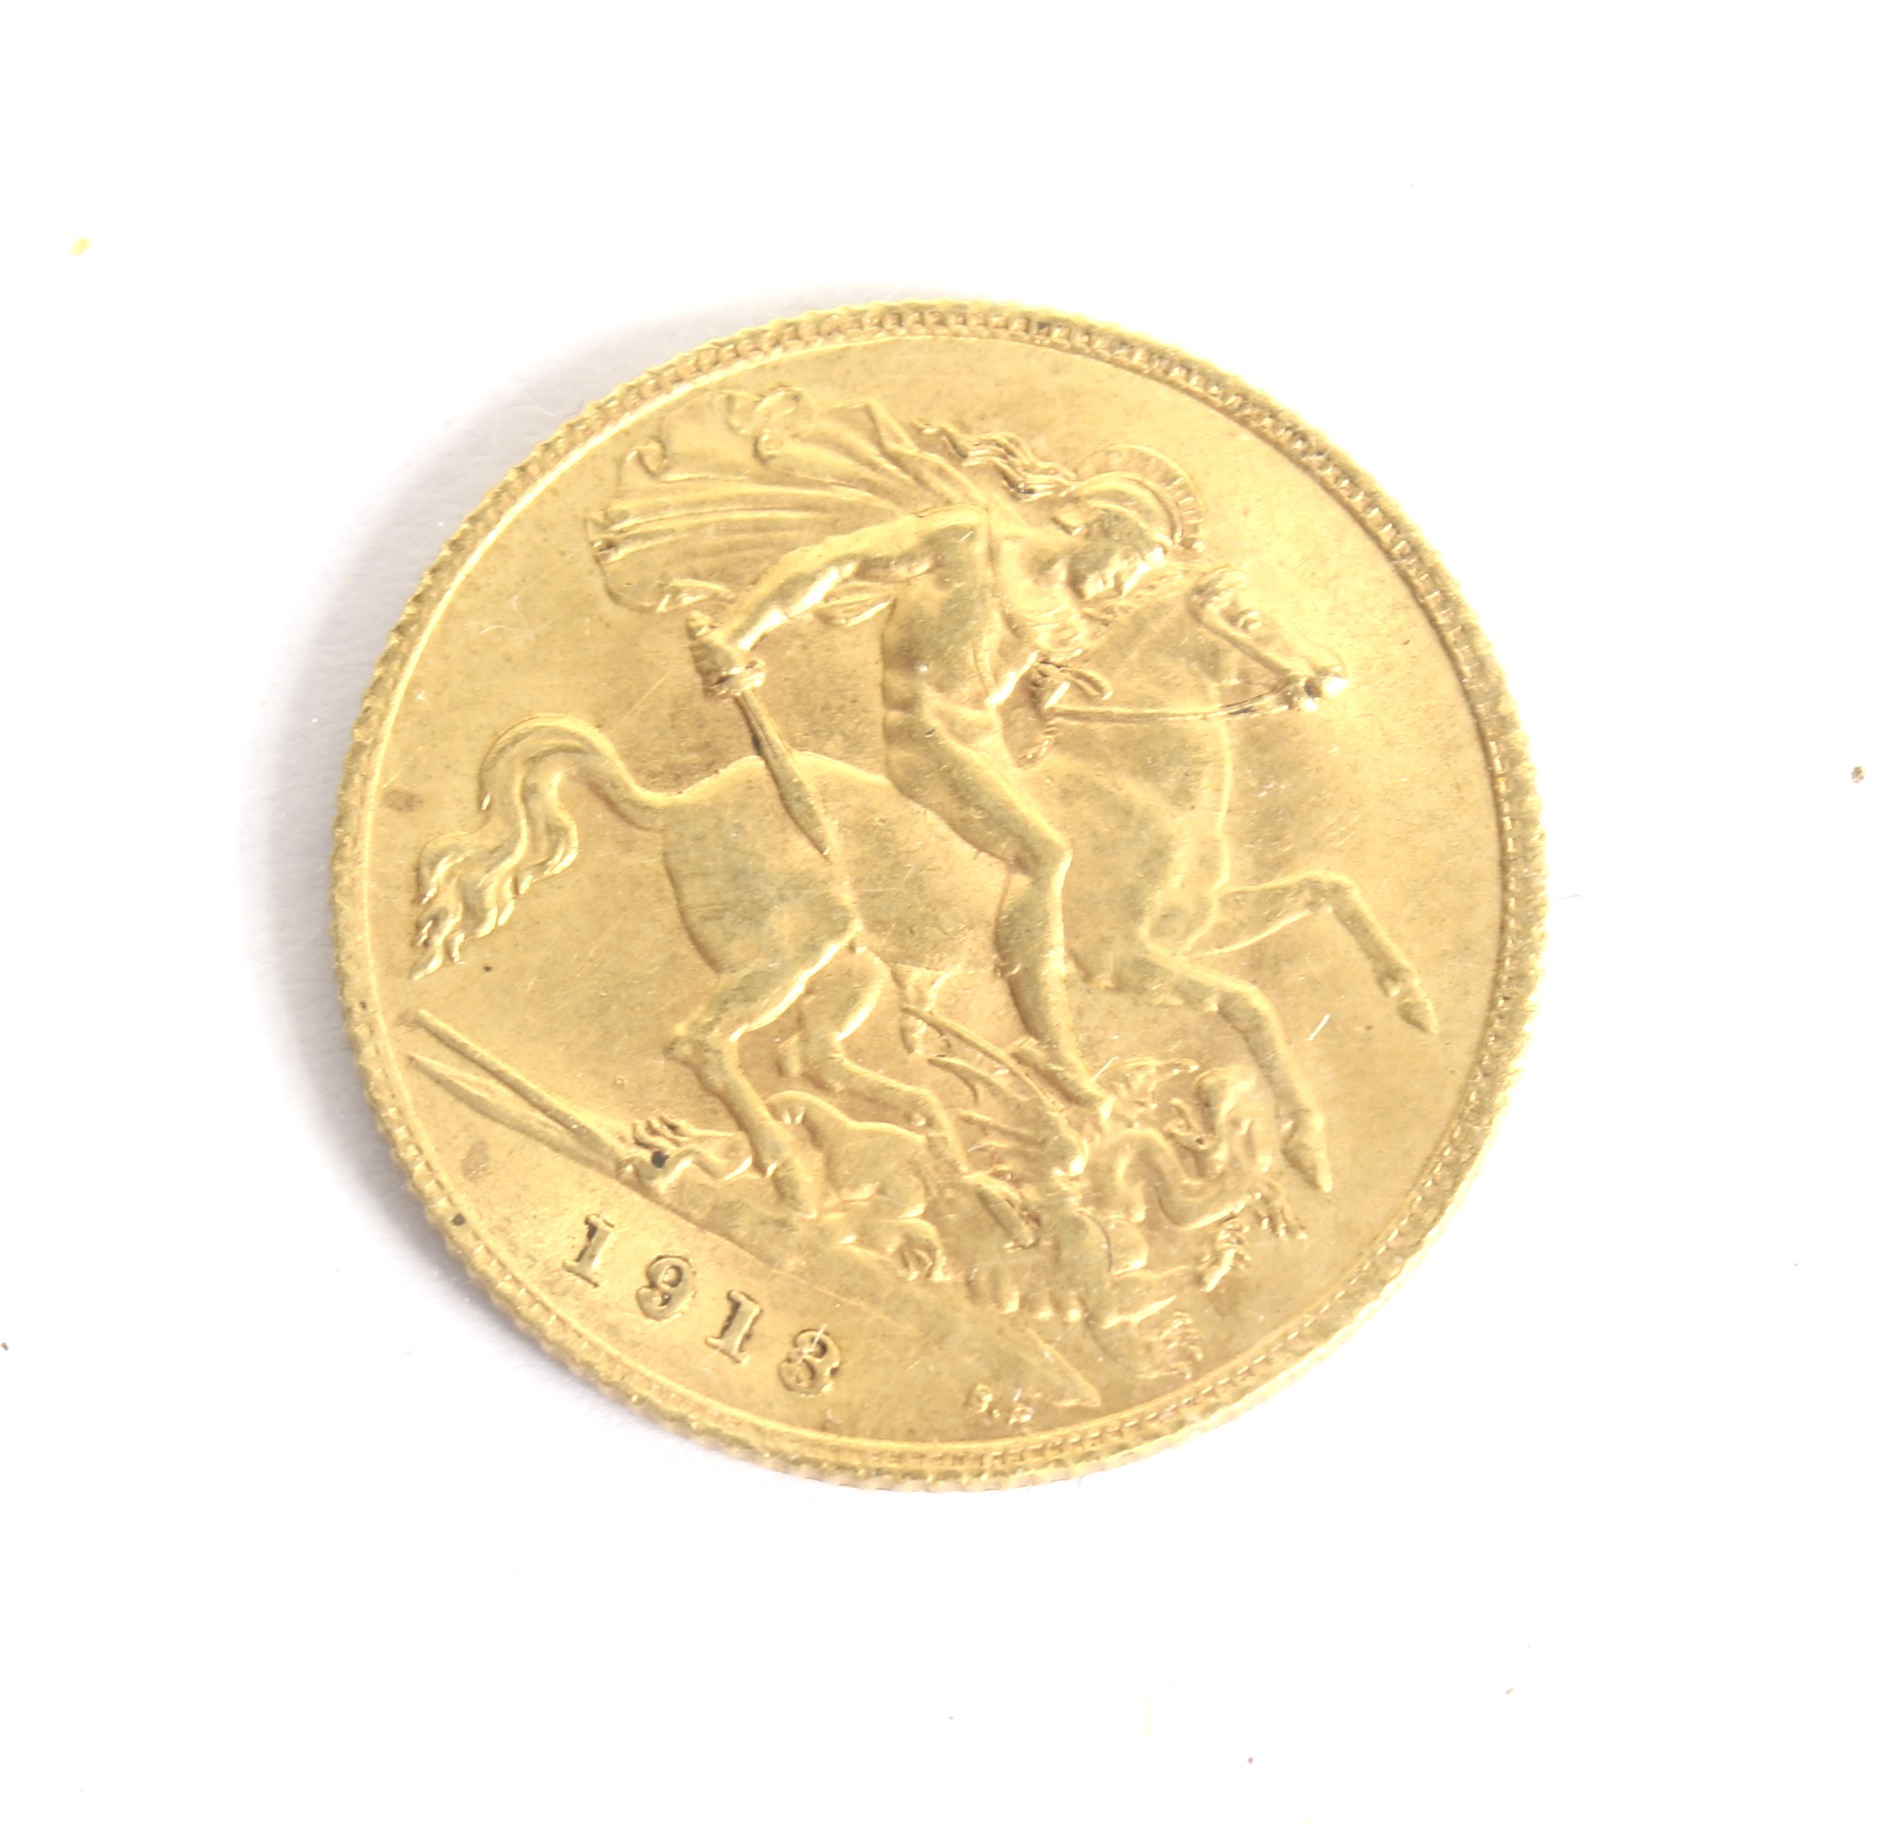 A 1913 half sovereign coin. - Image 2 of 2